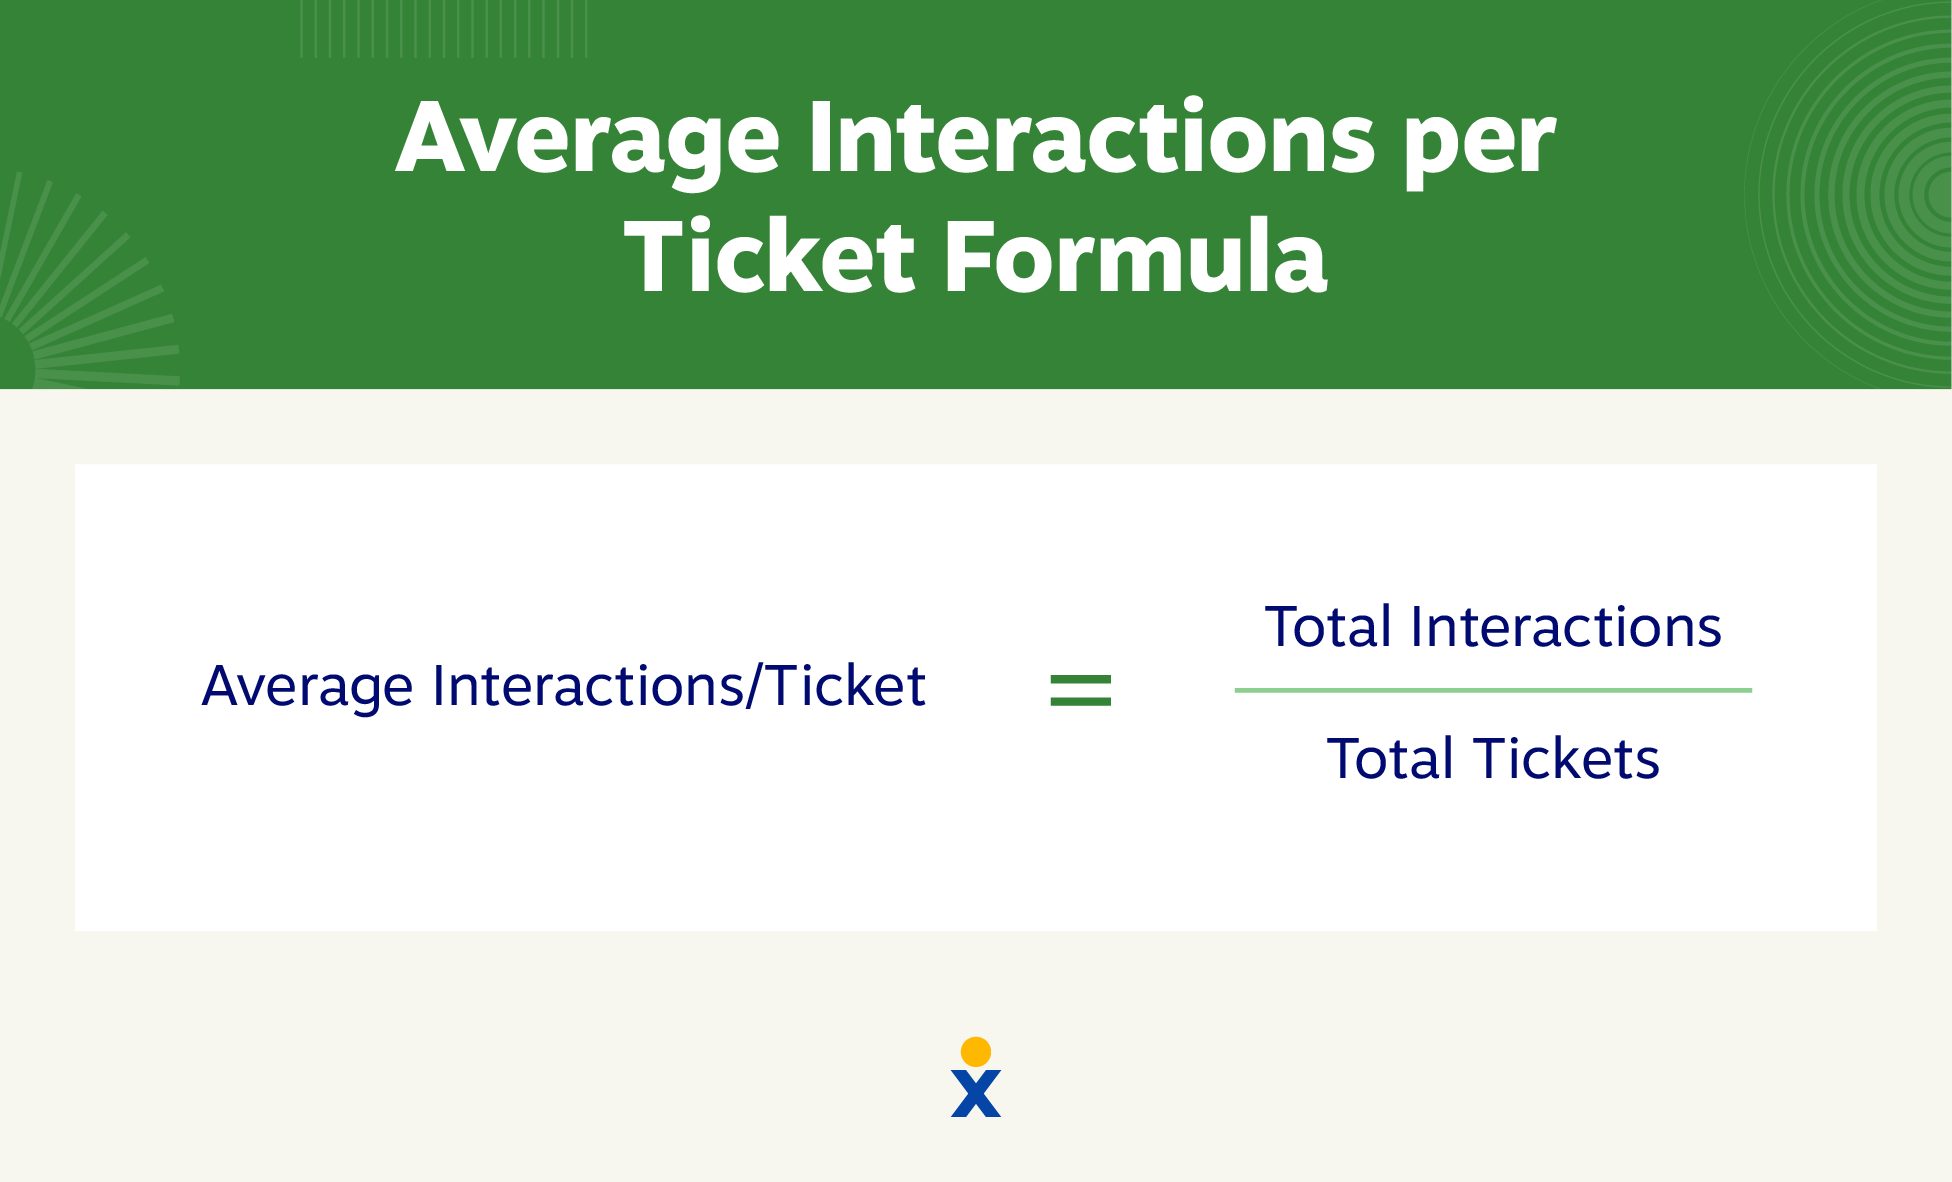 Average Interactions per Ticket formula